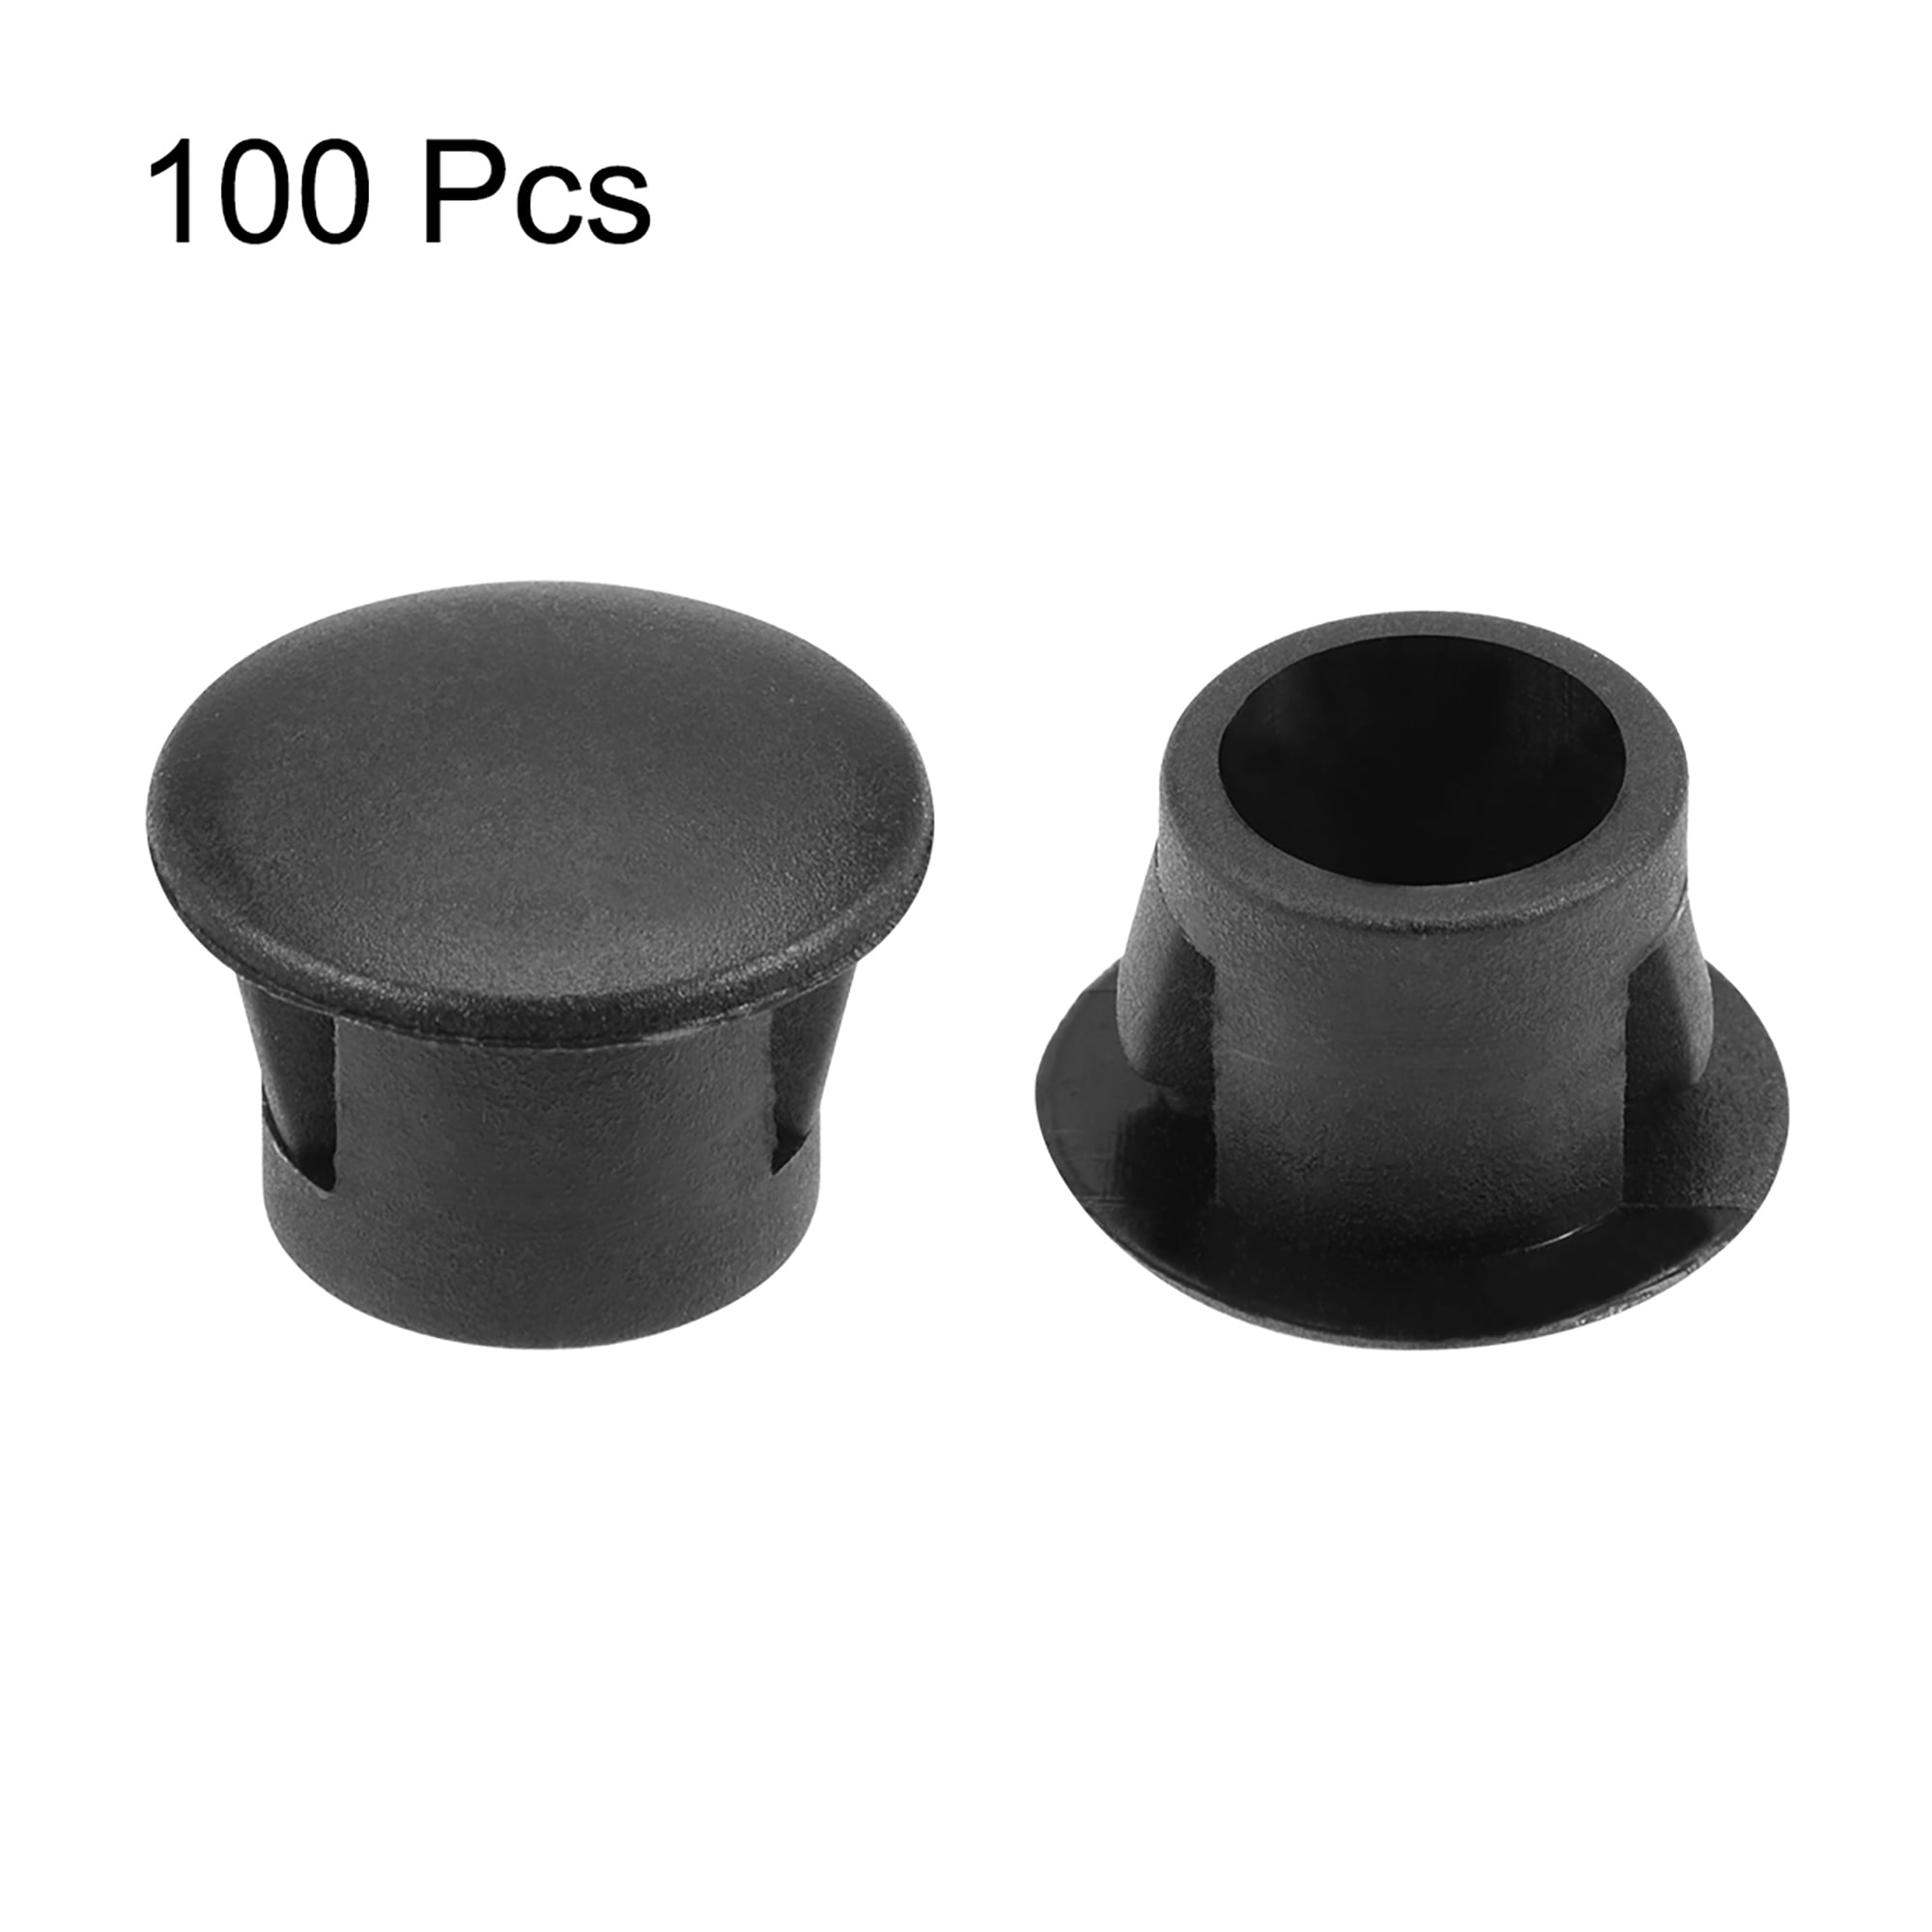 Black 5/16" 60PCS Hole Plugs Plastic Flush Type Hole Plugs Snap in Locking 8mm 